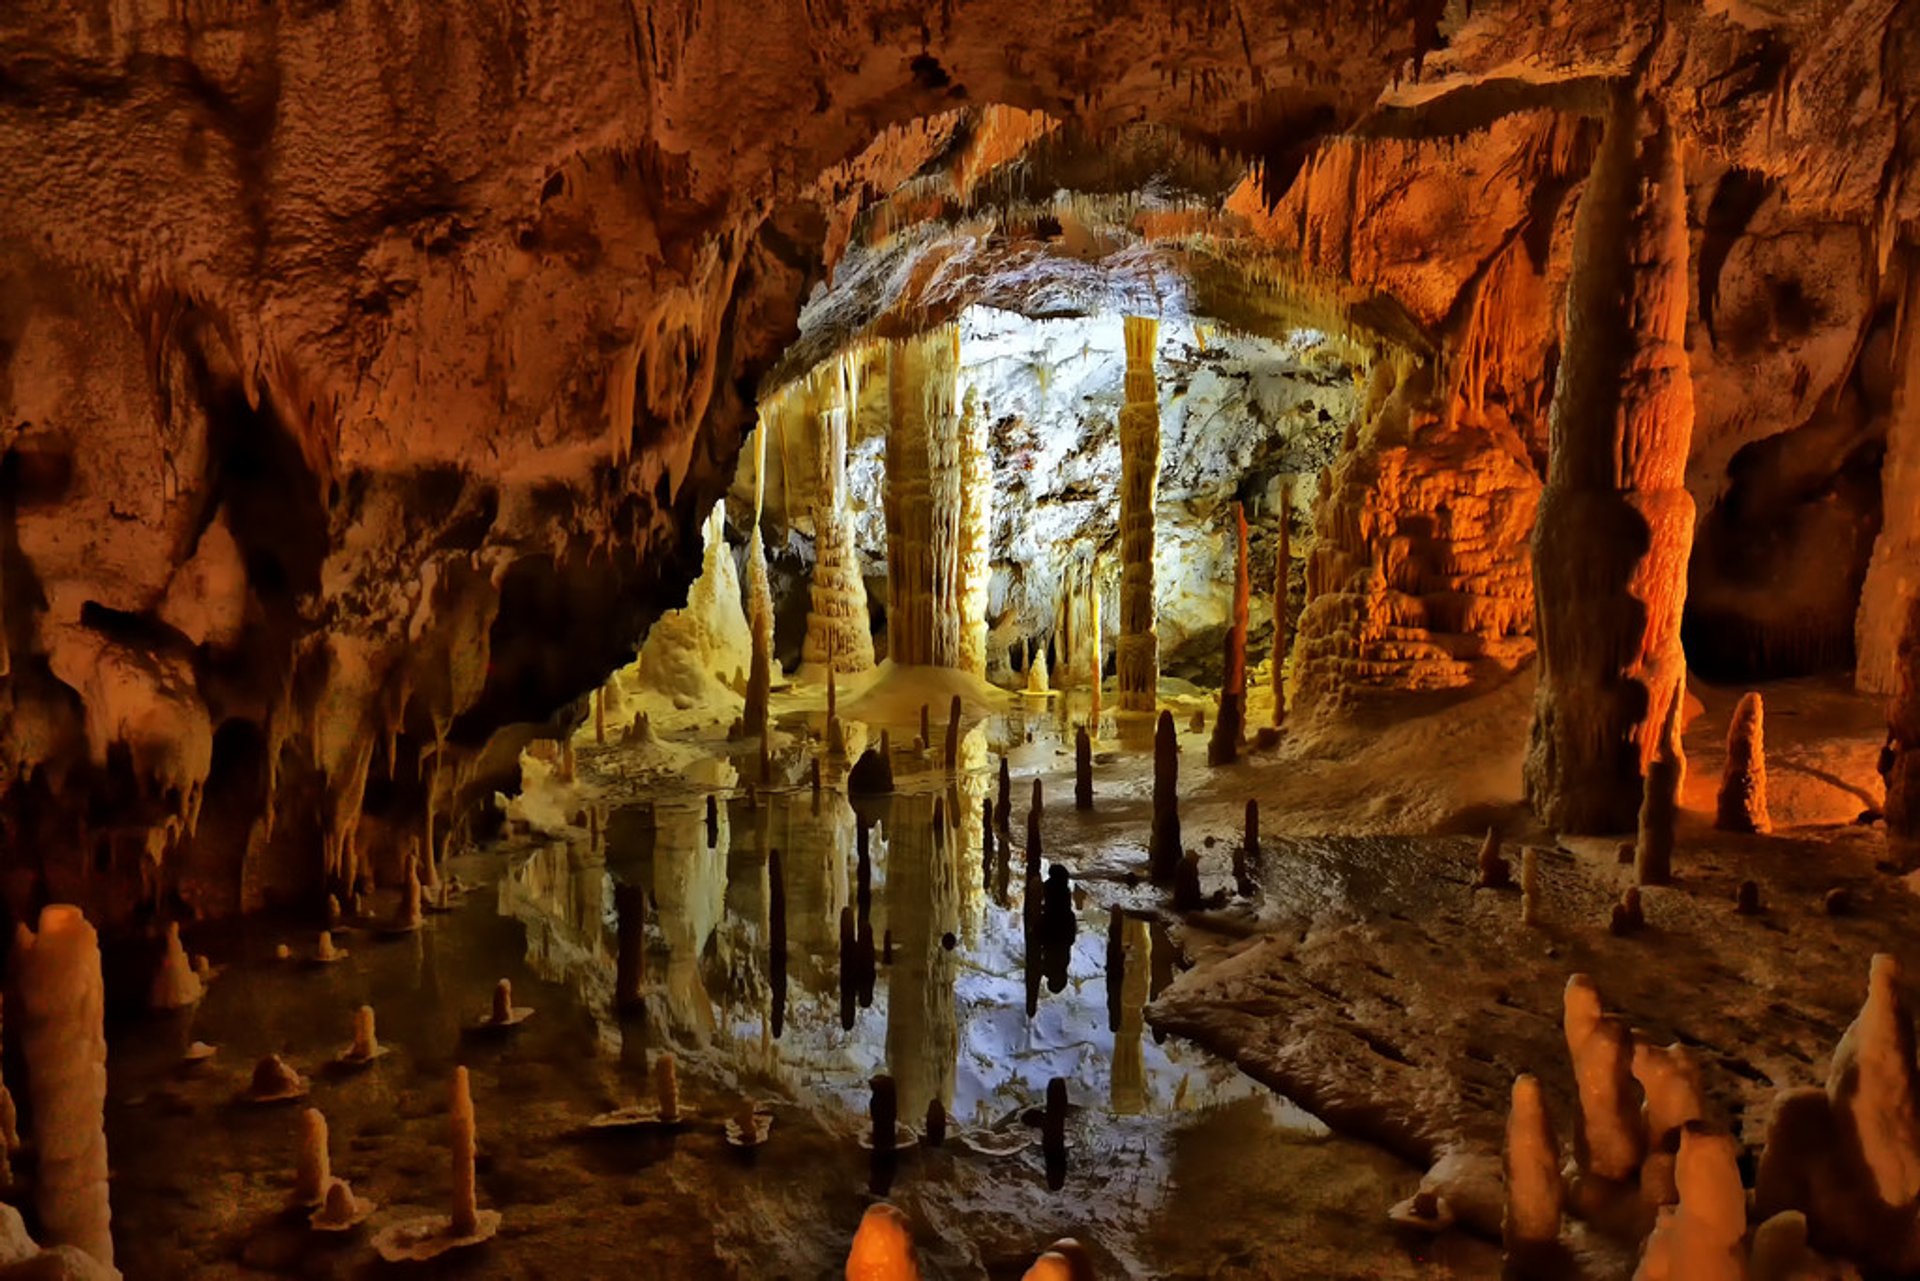 Cuevas de Frasassi (Grotte di Frasassi), Genga